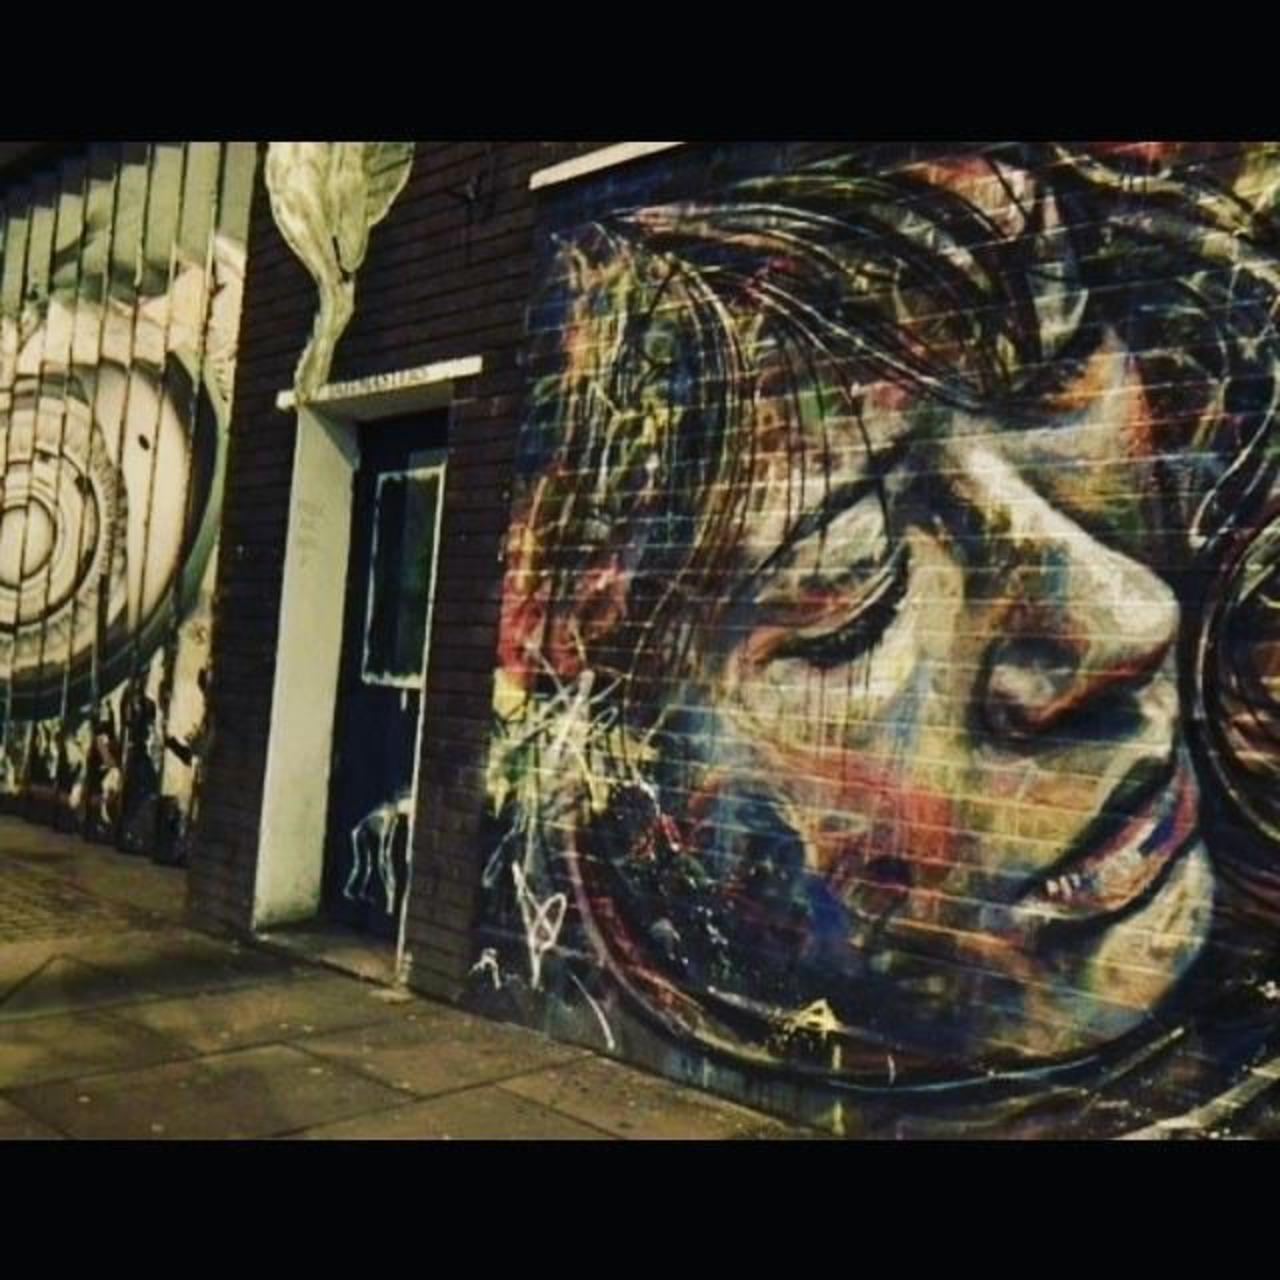 RT @artpushr: via #sami_cinou "http://bit.ly/1LuAVS3" #graffiti #streetart http://t.co/qGx8khheDI